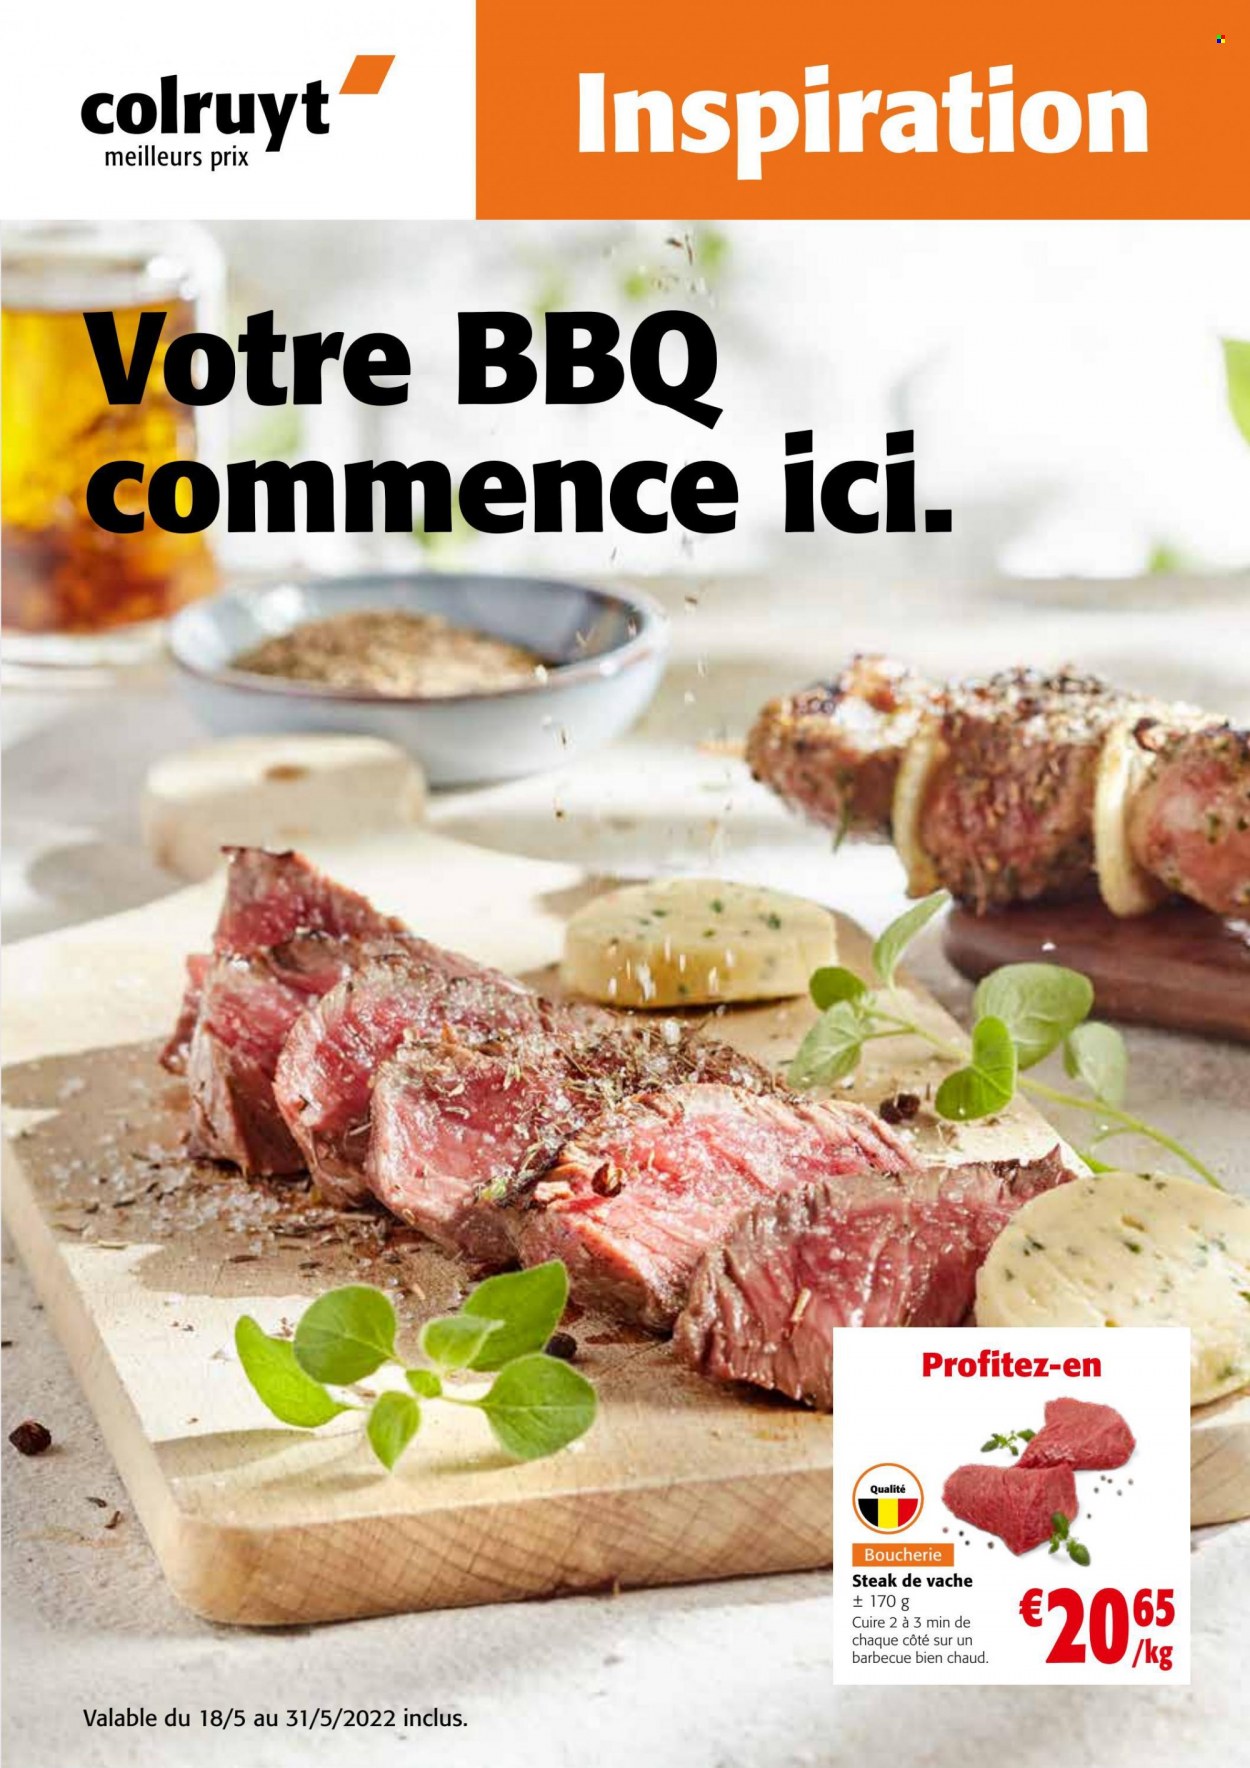 thumbnail - Colruyt-aanbieding - 18/05/2022 - 31/05/2022 -  producten in de aanbieding - steak, BBQ. Pagina 1.